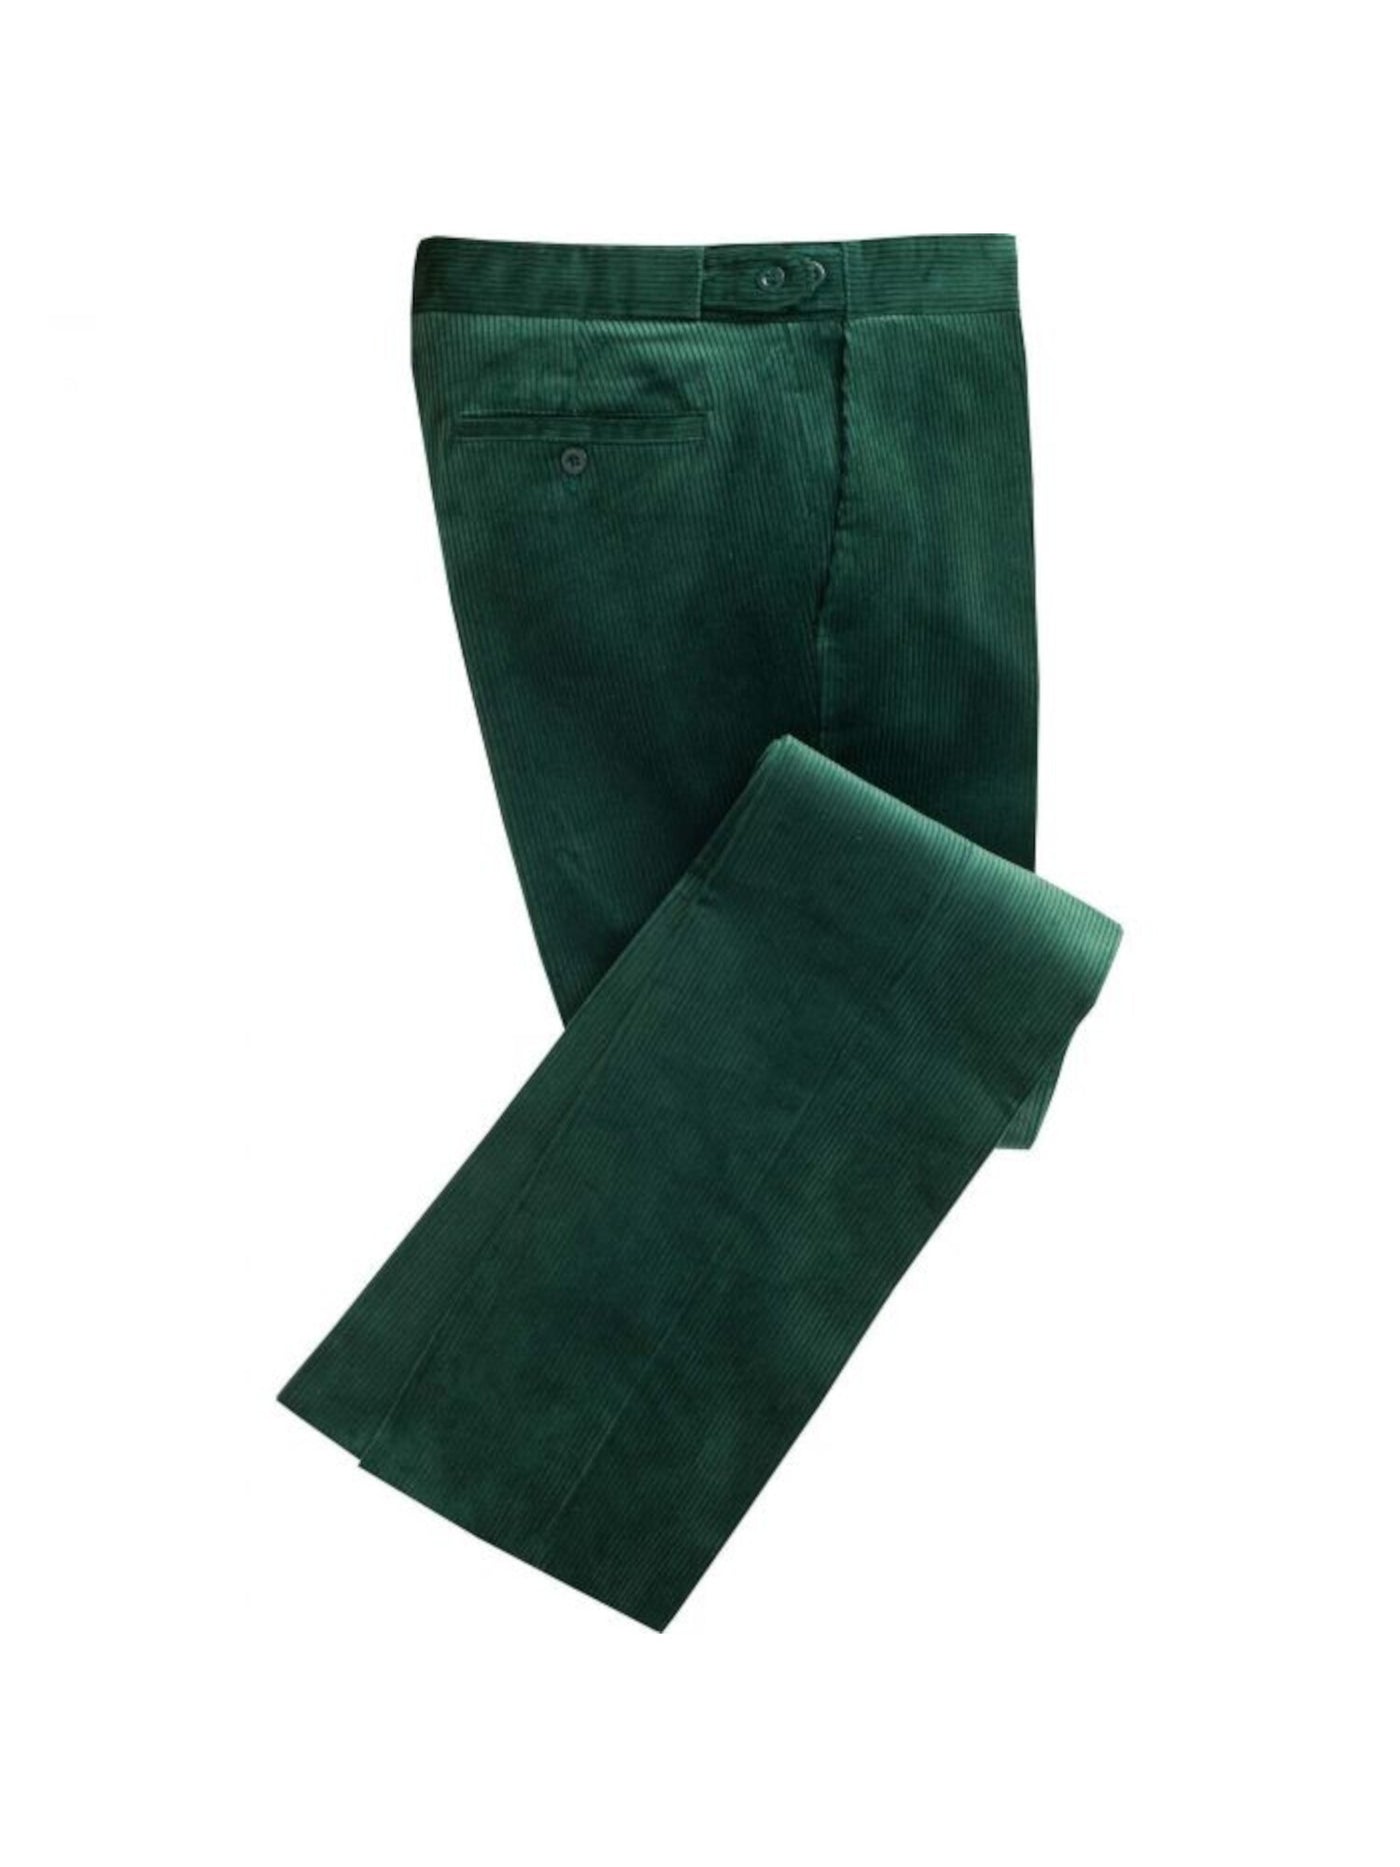 TORIN OPIFICIO Mens Green Flat Front Straight Leg Stretch Regular Fit Cotton Blend Pants 48